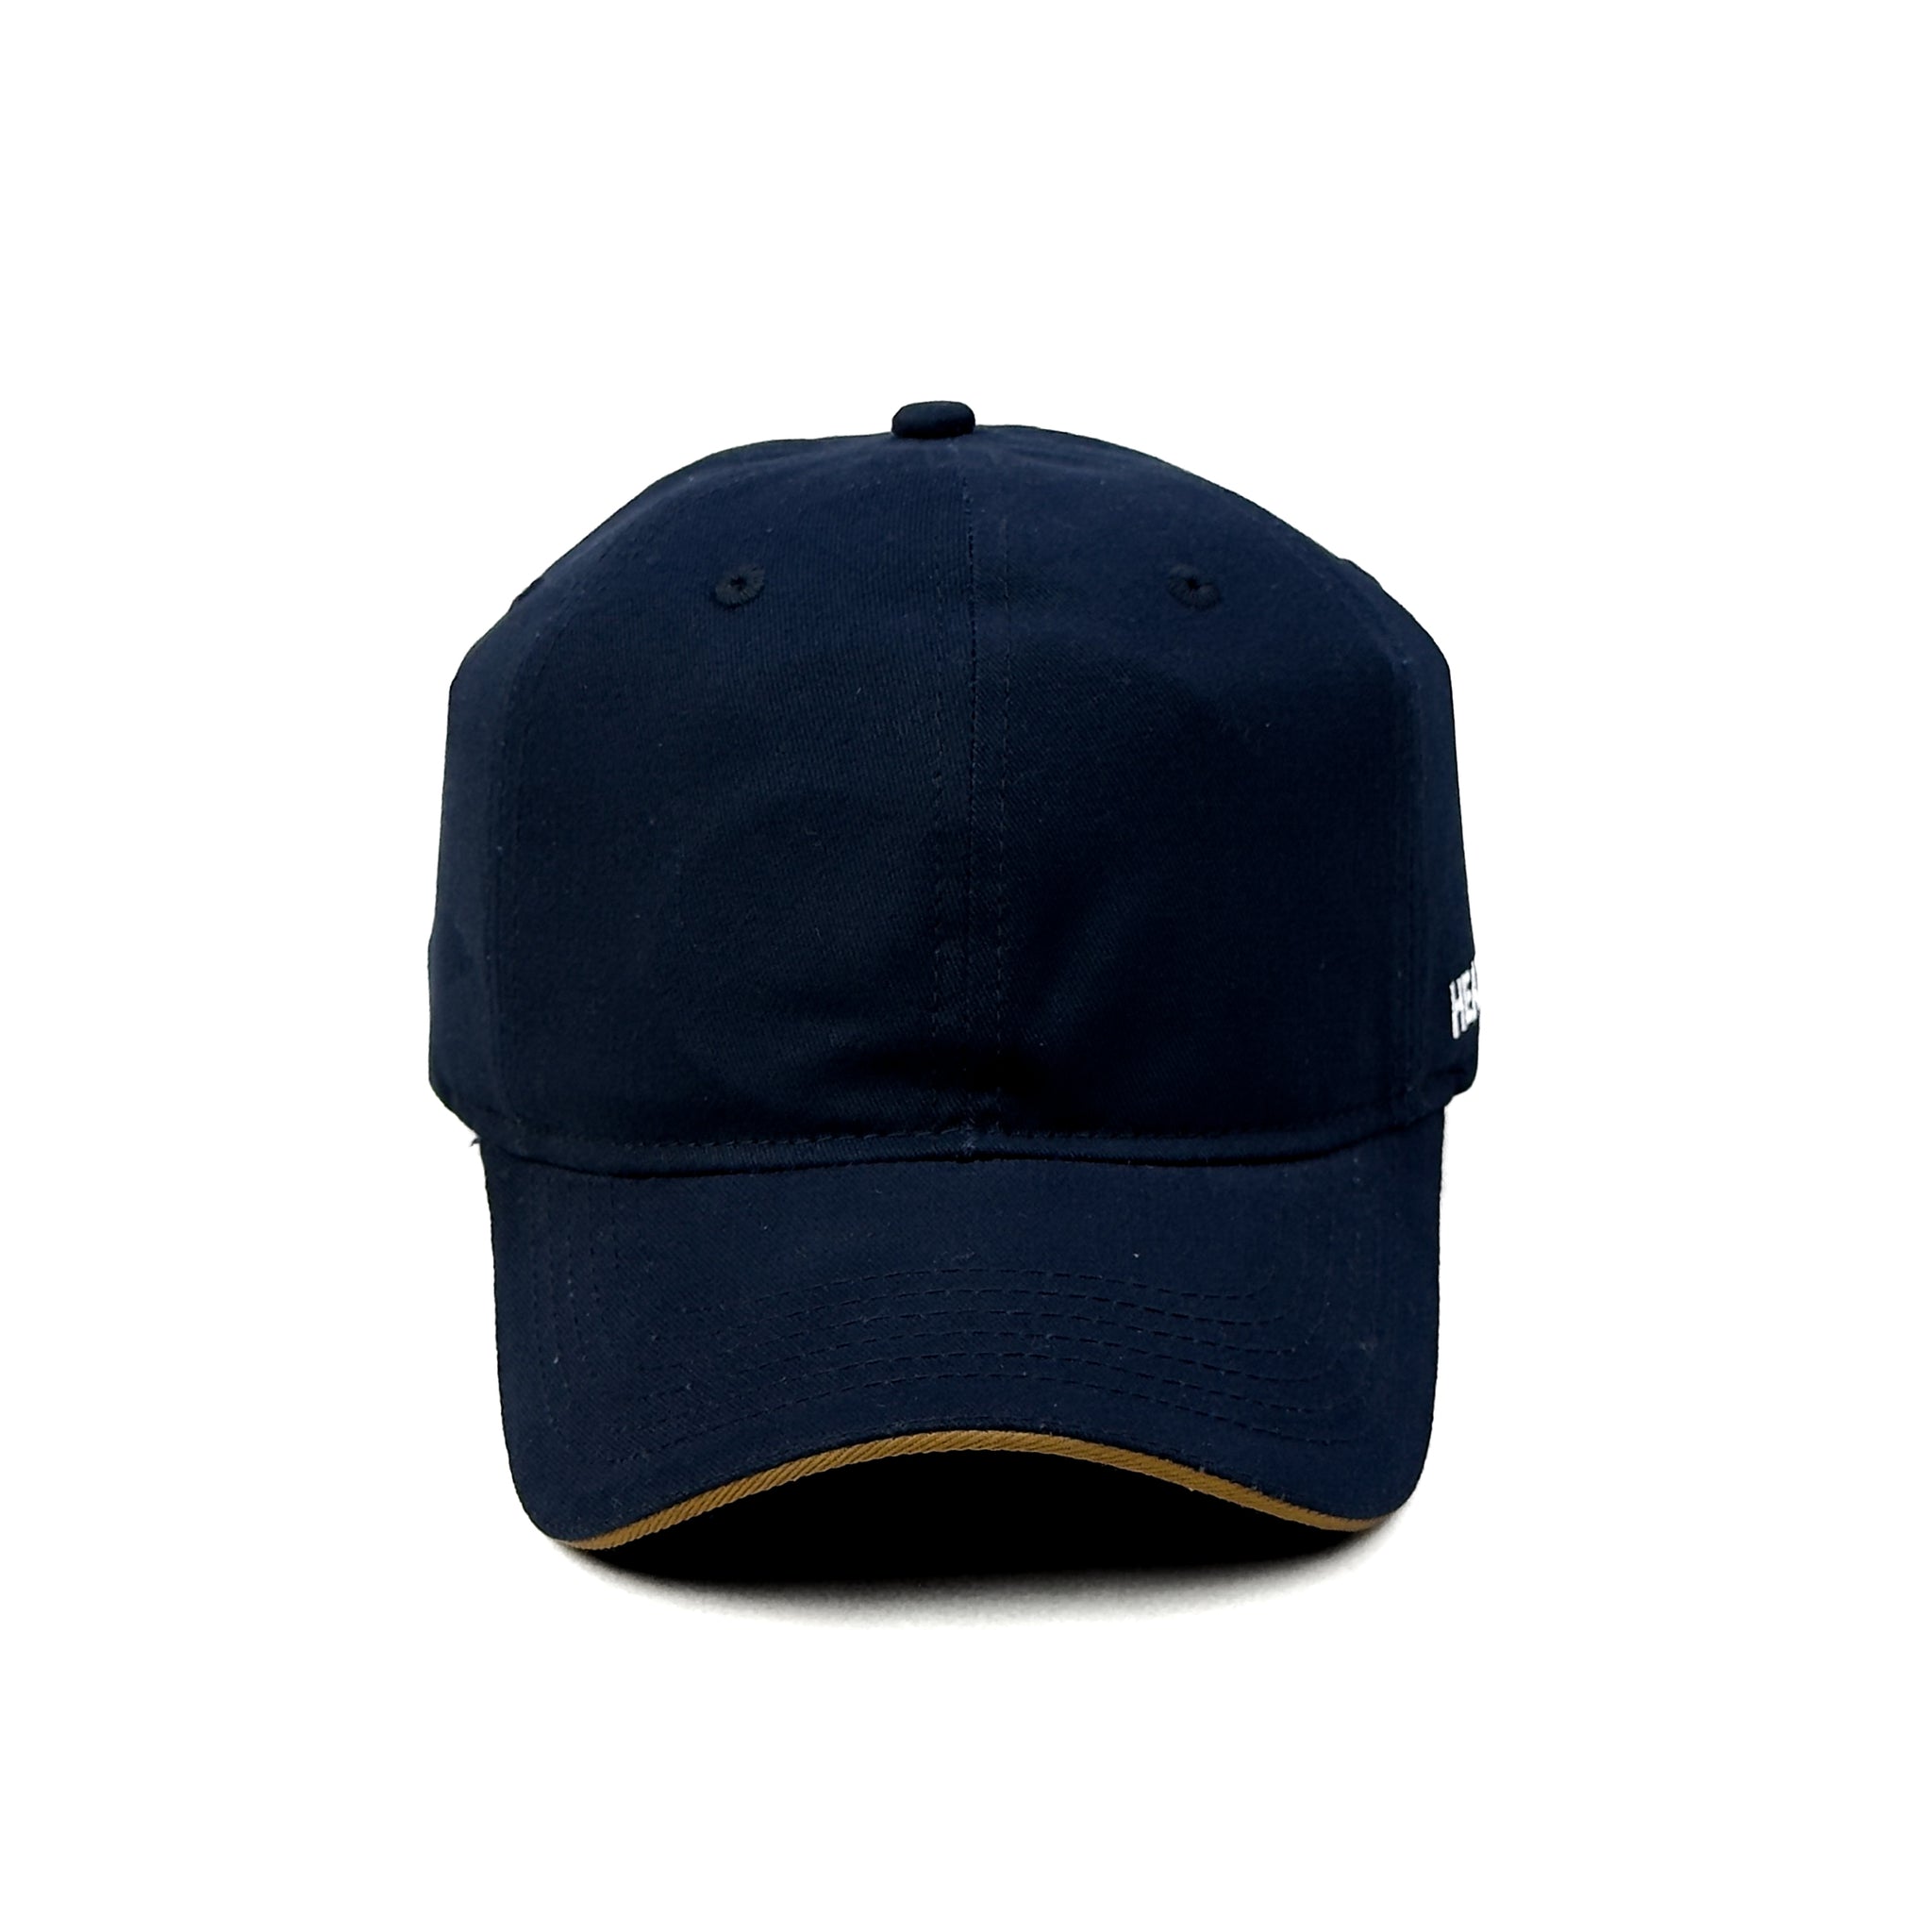 HEAD GEAR NAVY BLUE WITH BROWN SANDWICH CAP